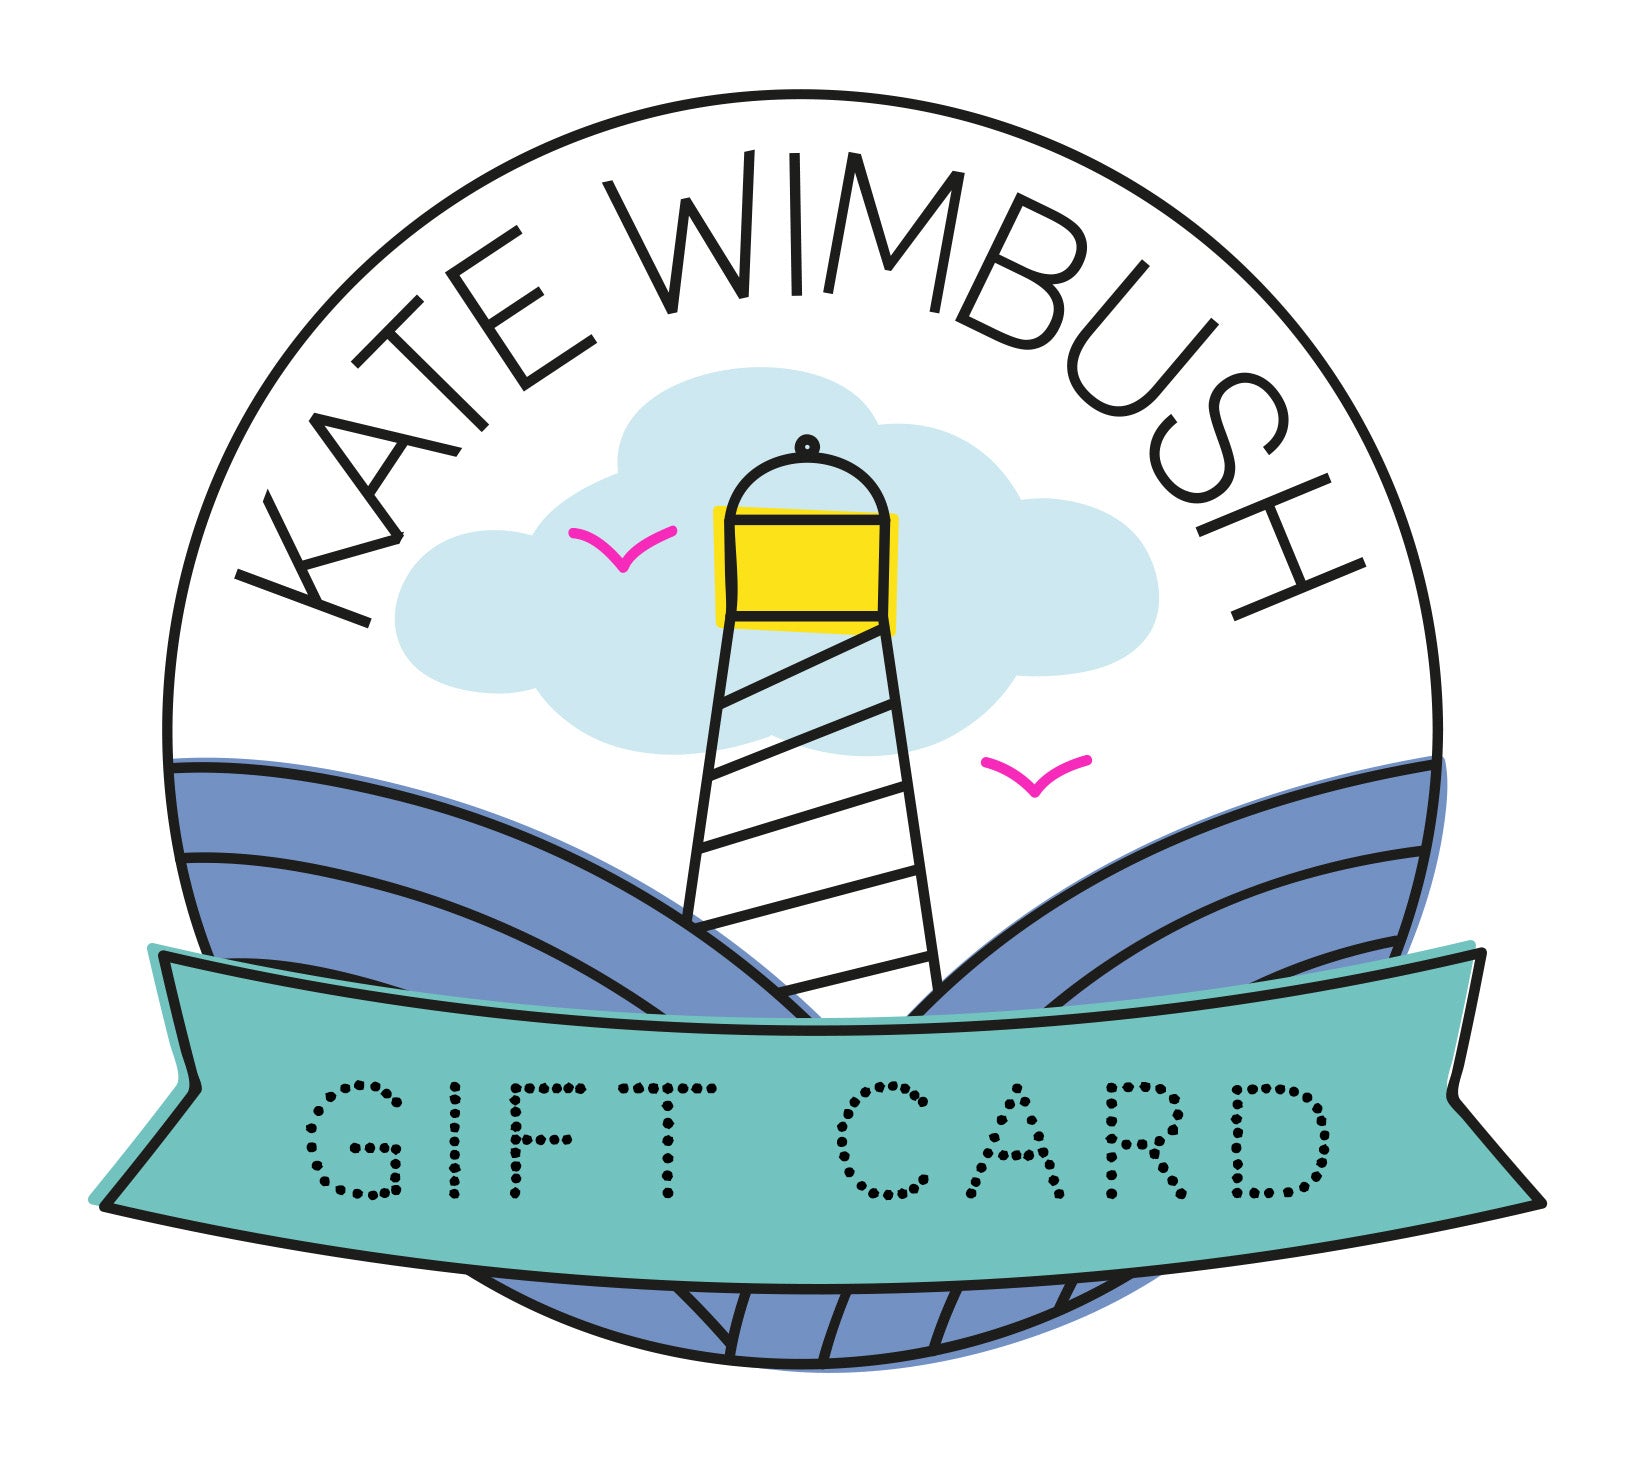 Kate Wimbush Jewellery Giftcard